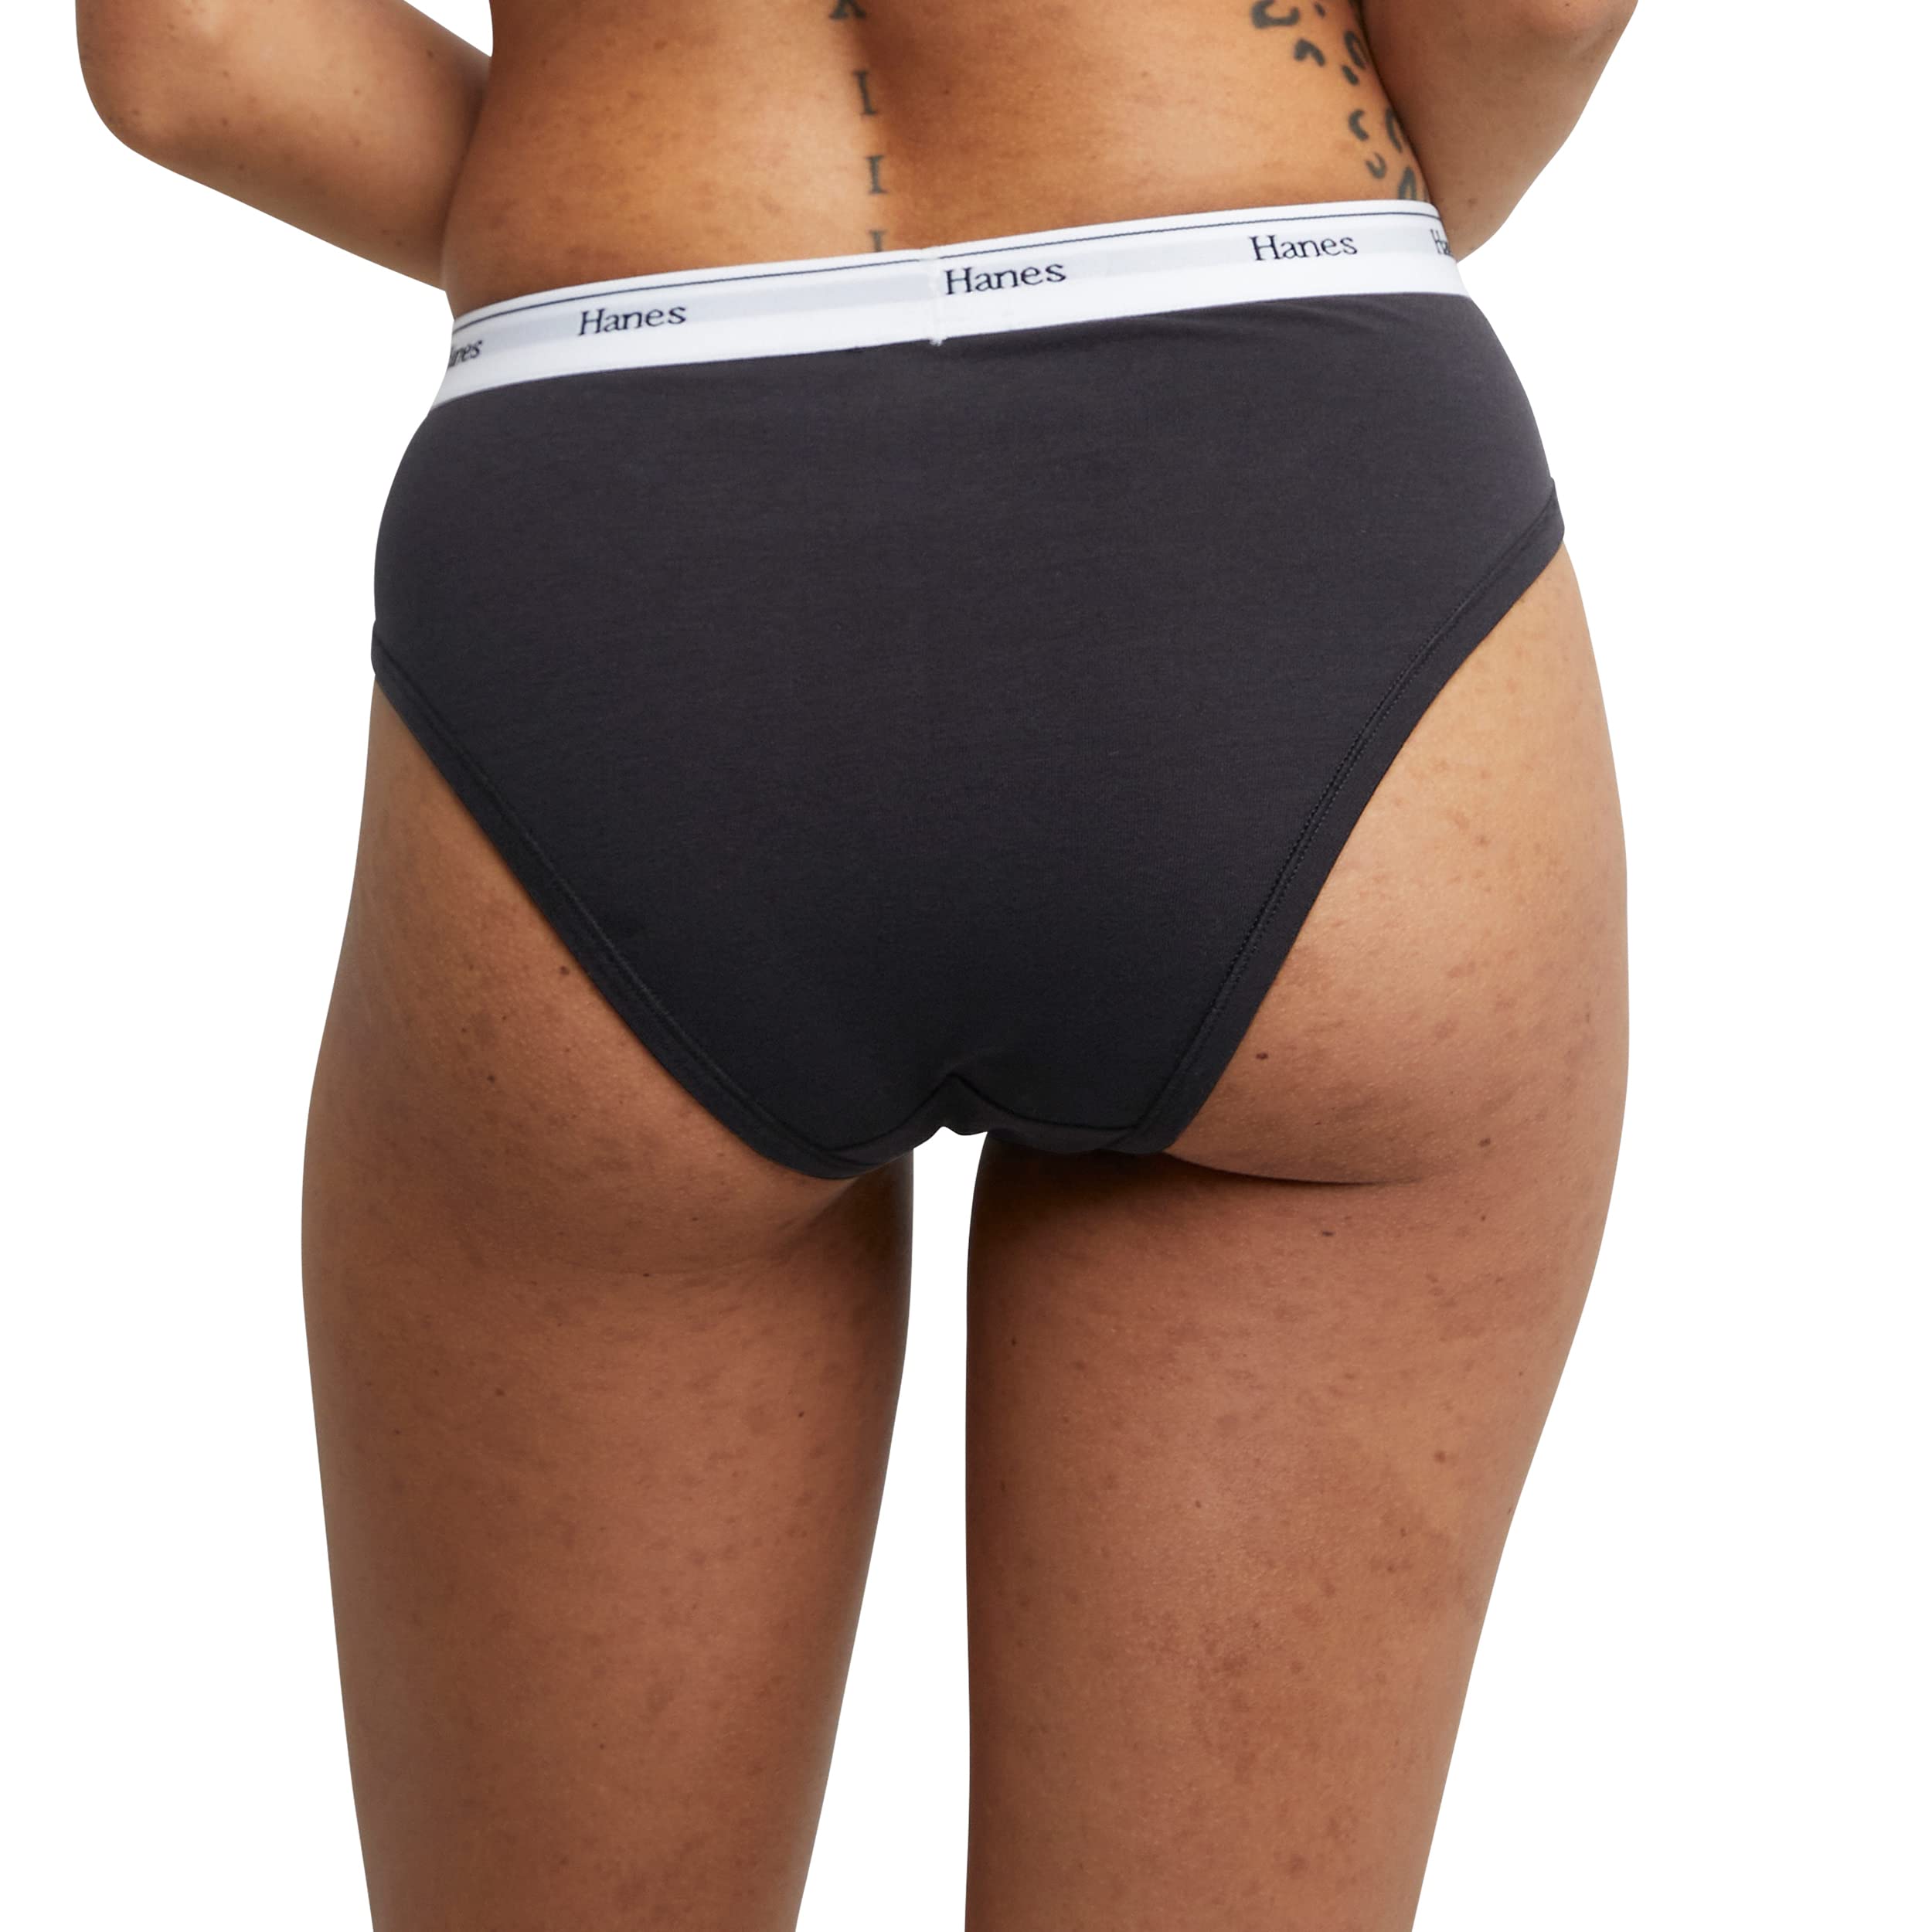 Hanes Women's Originals Panties Pack, Breathable Cotton Stretch Underwear, Basic Color Mix, 6-Pack Hi-Cuts, Medium